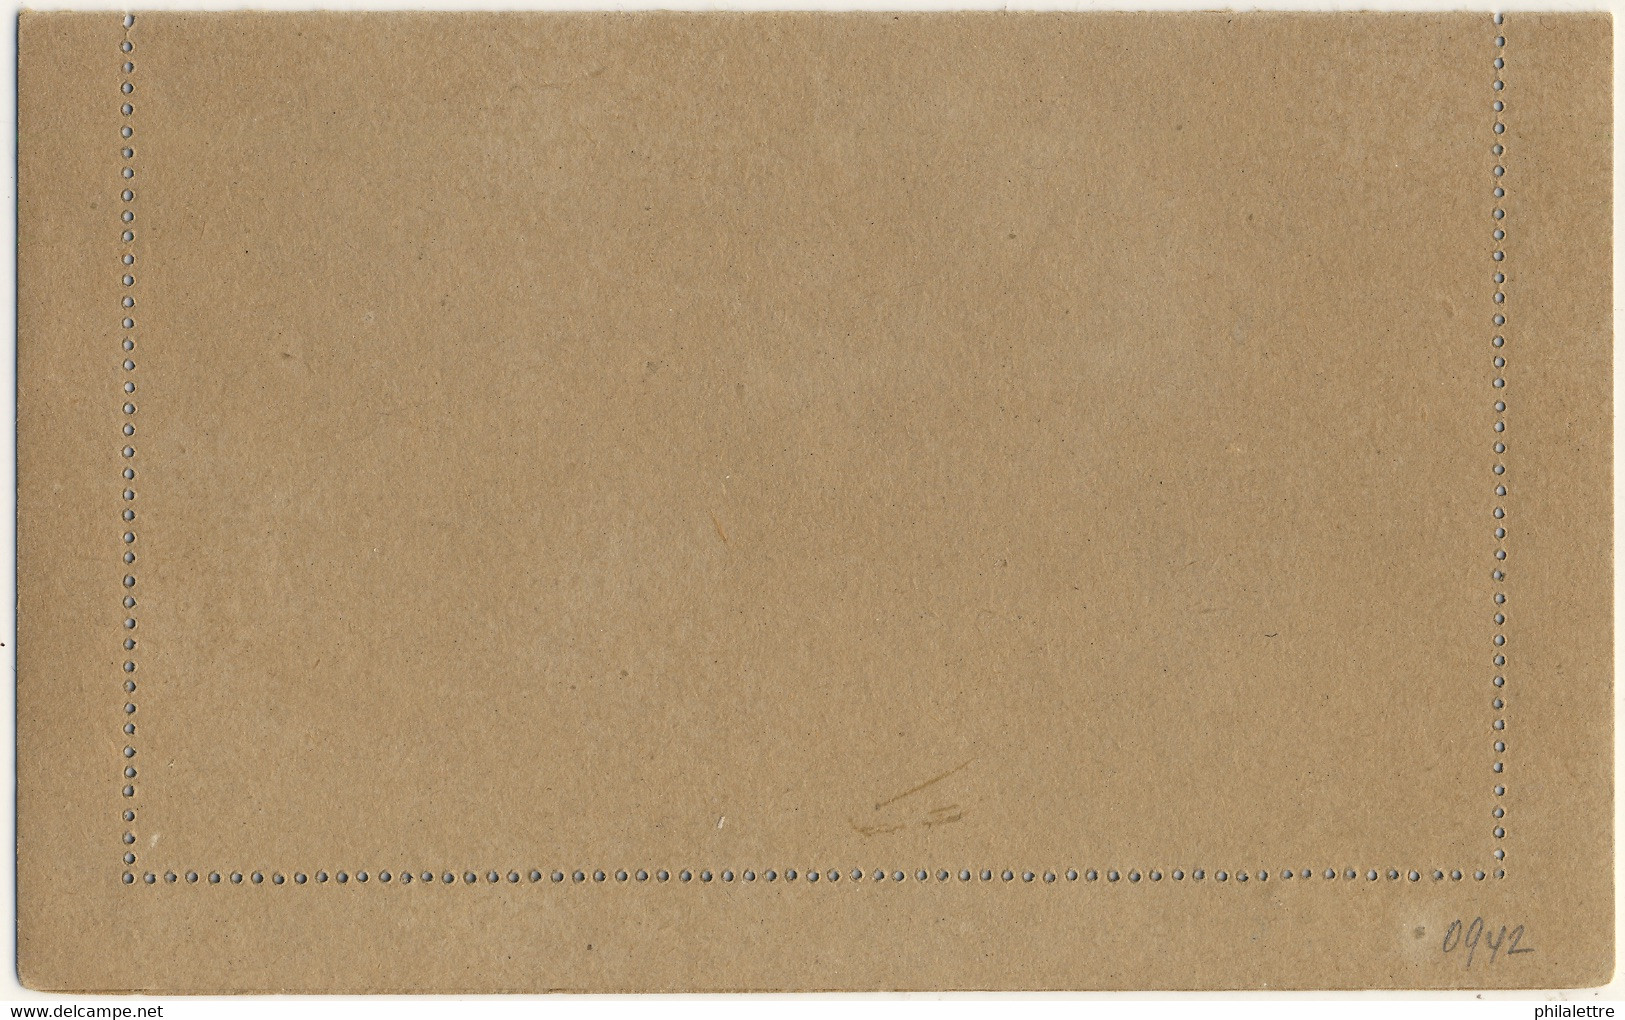 FRANCE - 1887 N°SAG-J19 Carte-lettre 15c Sage Sans Date - Neuve - Cartoline-lettere